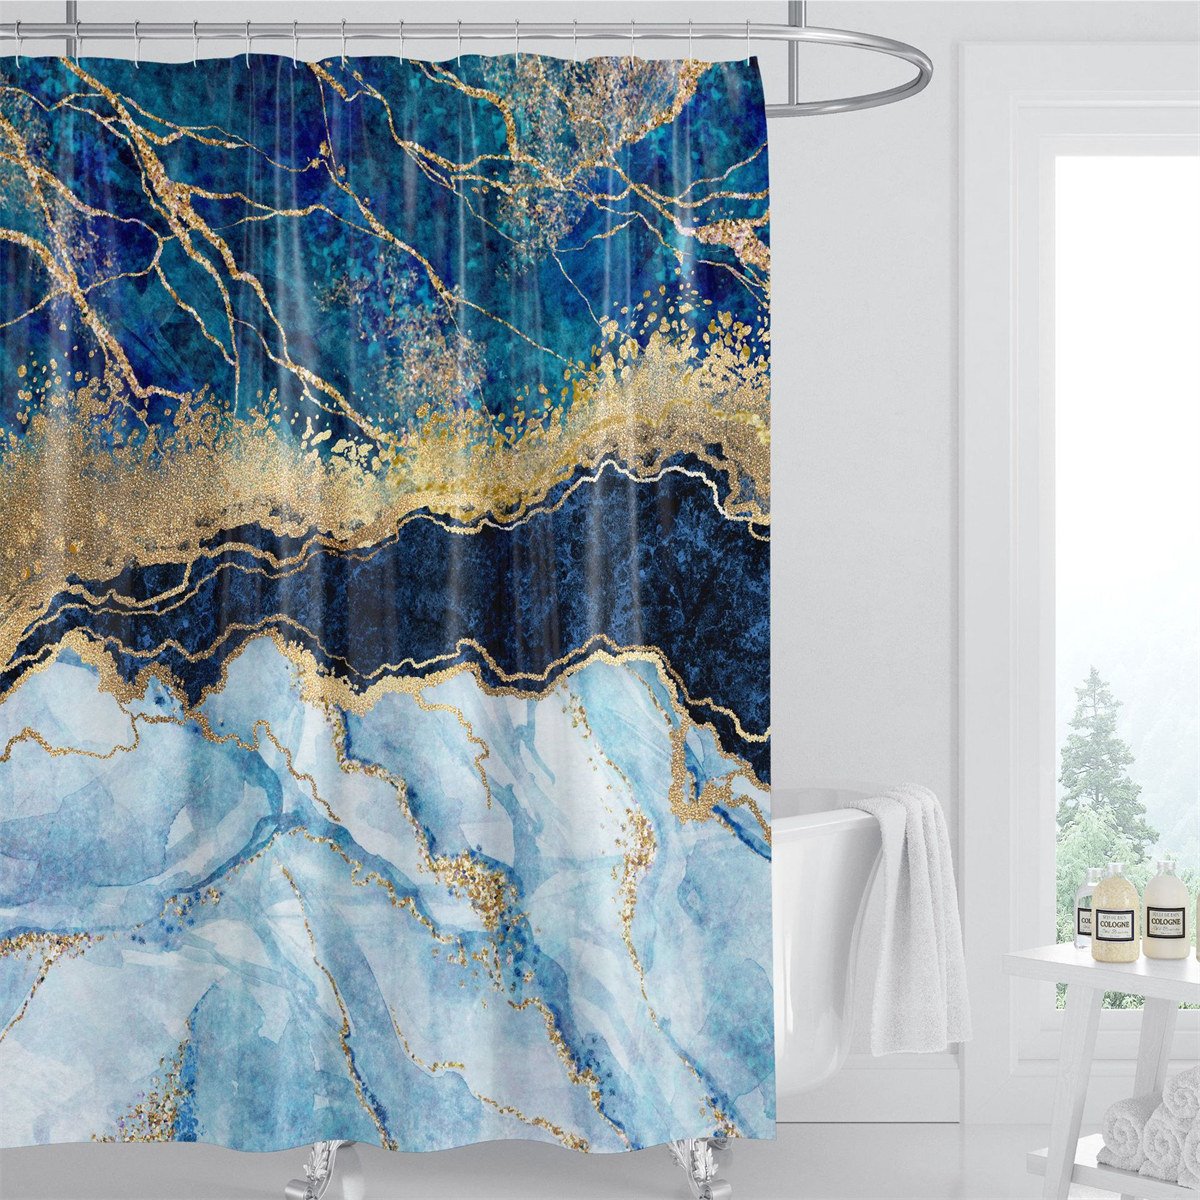 Marmorierter 3D-Duschvorhang, Badezimmer-Trennvorhang, langlebig, wasserdicht, schimmelresistentes Polyester 